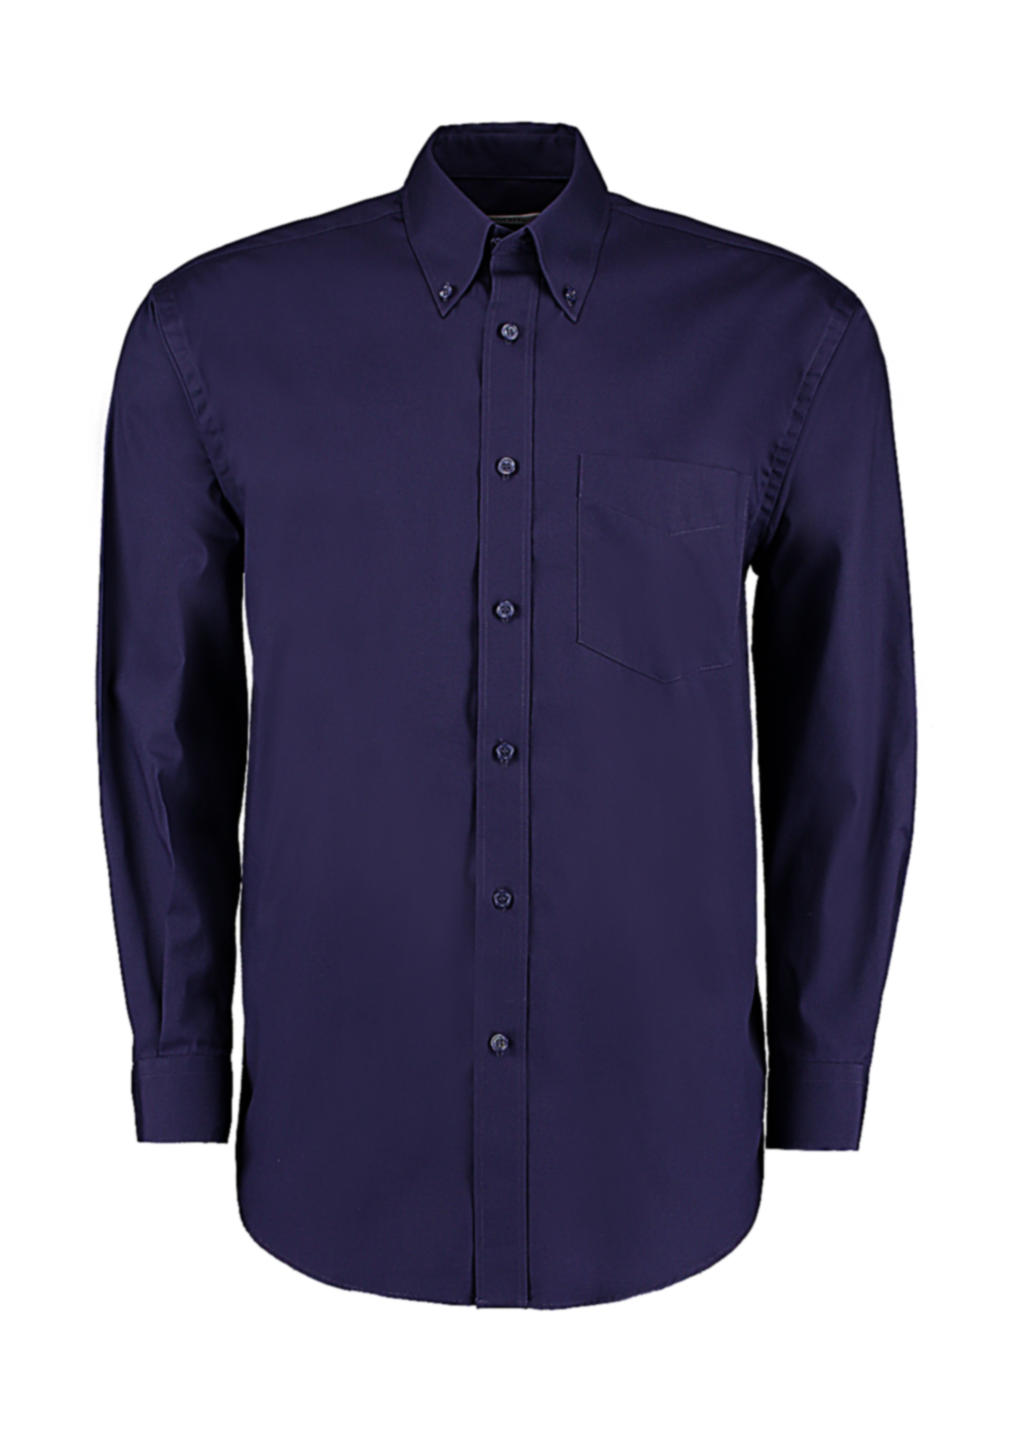 778.11 / Classic Fit Premium Oxford Shirt / Midnight Navy